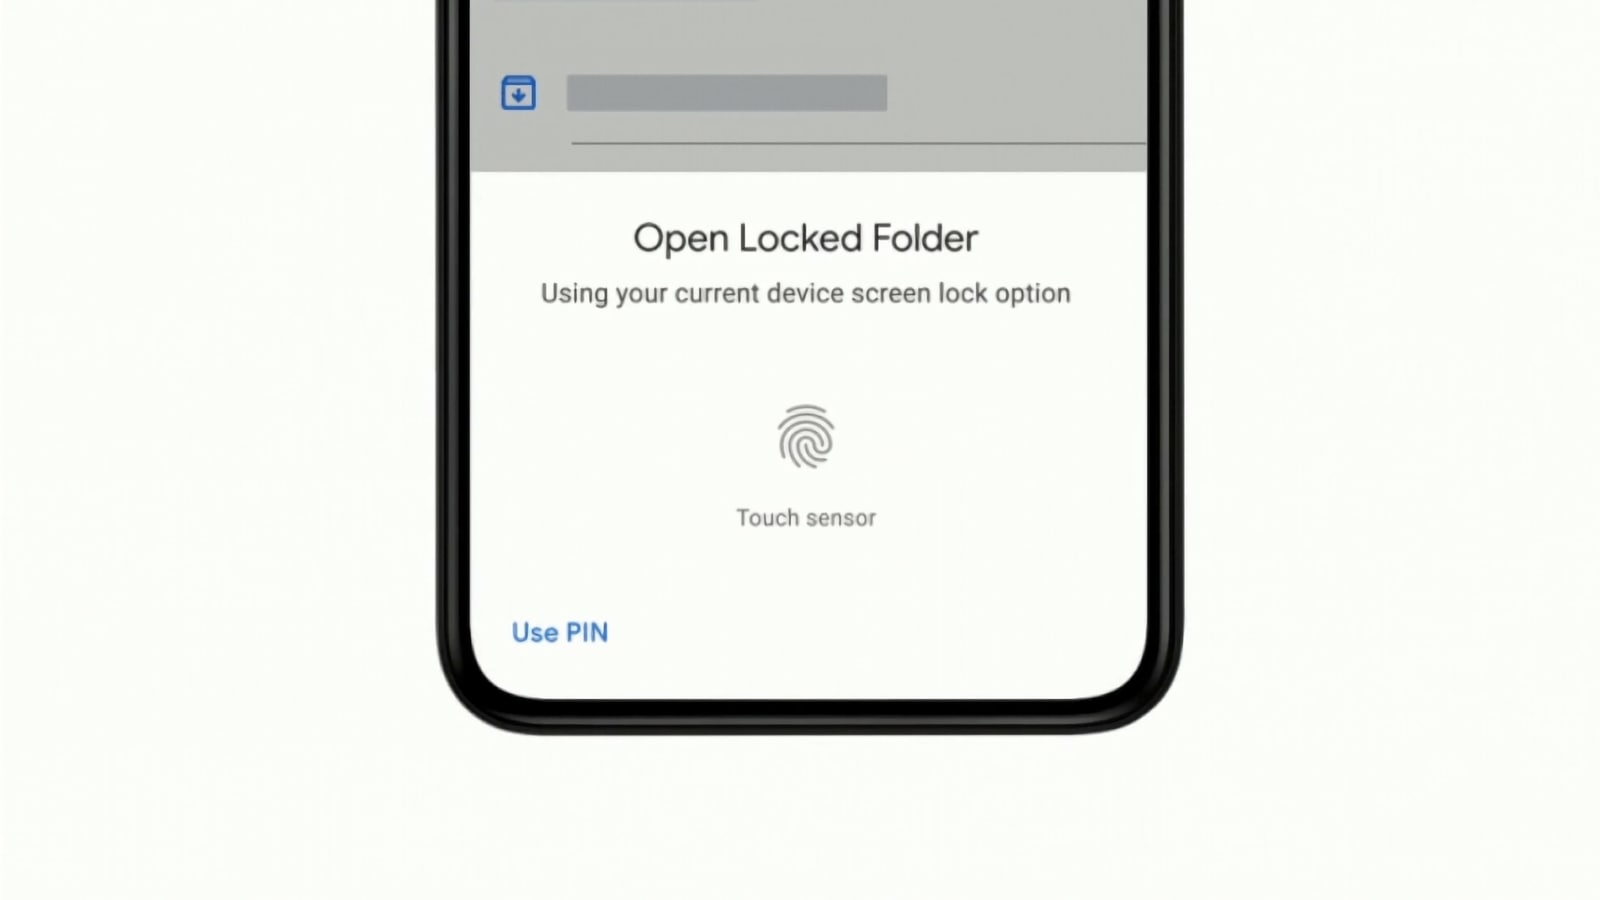 google photos locked folder android